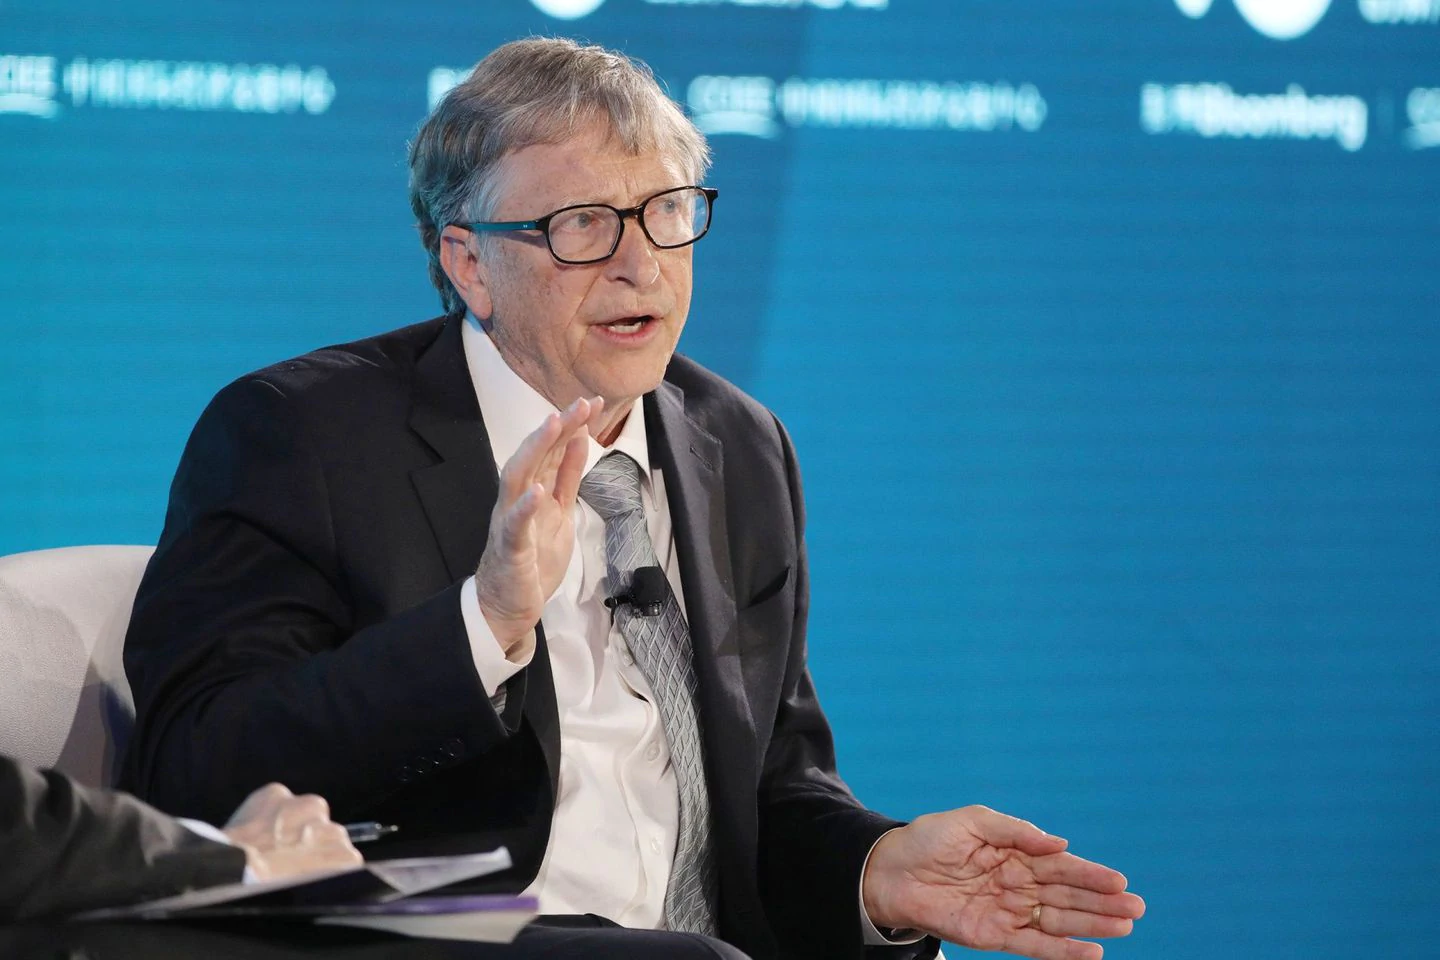 Bill Gates, in rebuke of Trump, calls WHO funding cut during pandemic ‘as dangerous as it sounds’